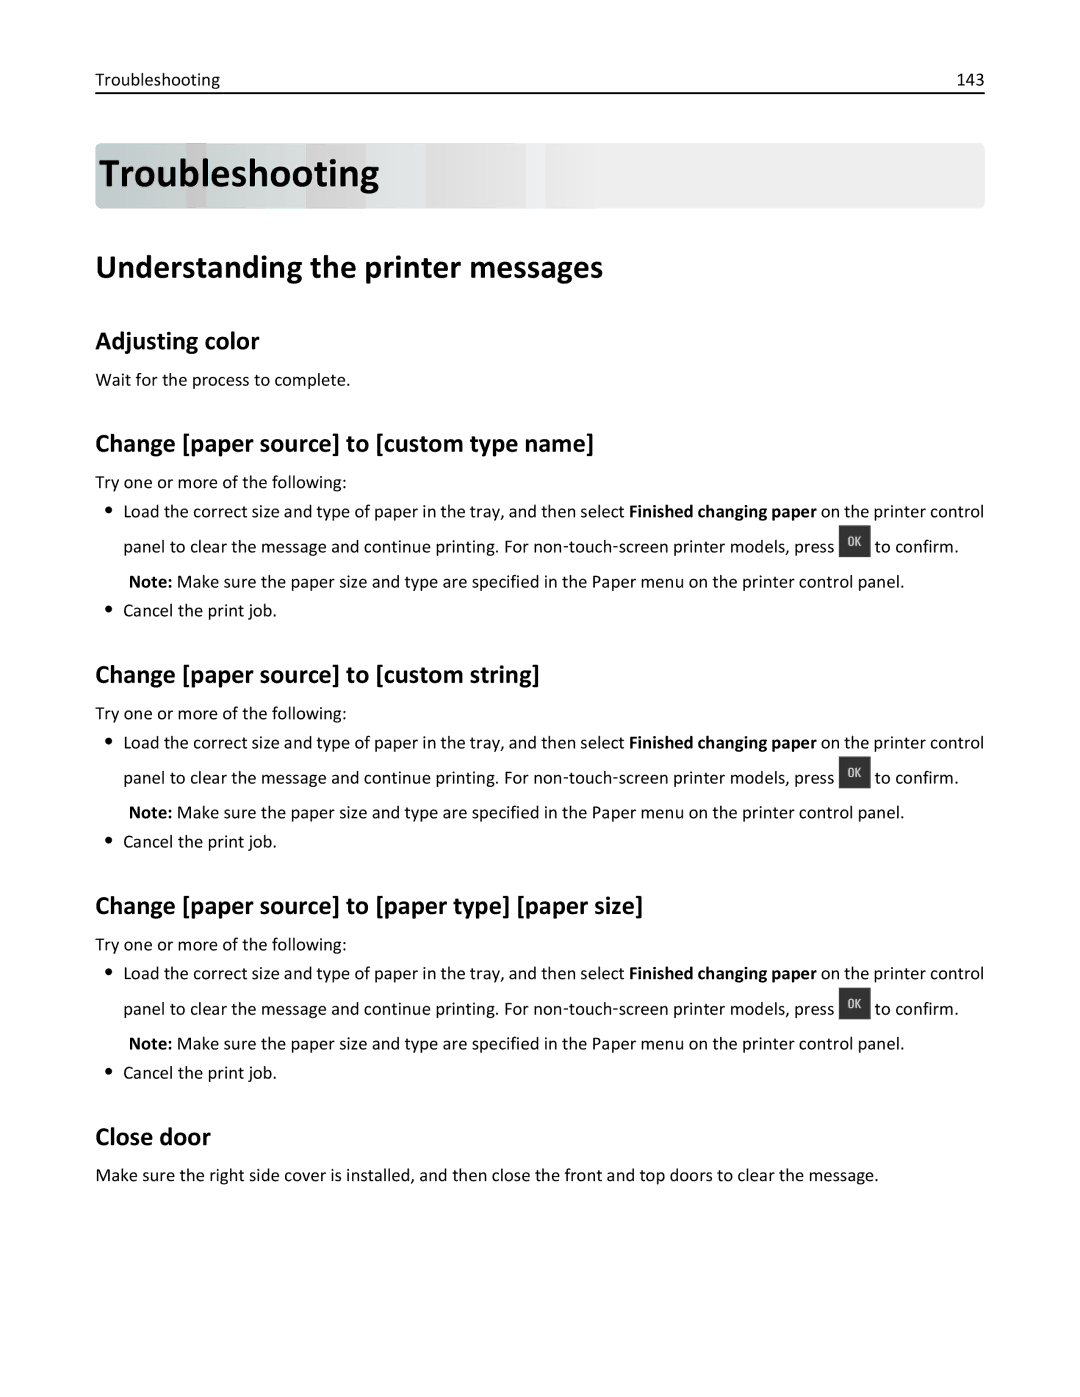 Lexmark CS410 manual Troubleshooting, Understanding the printer messages 